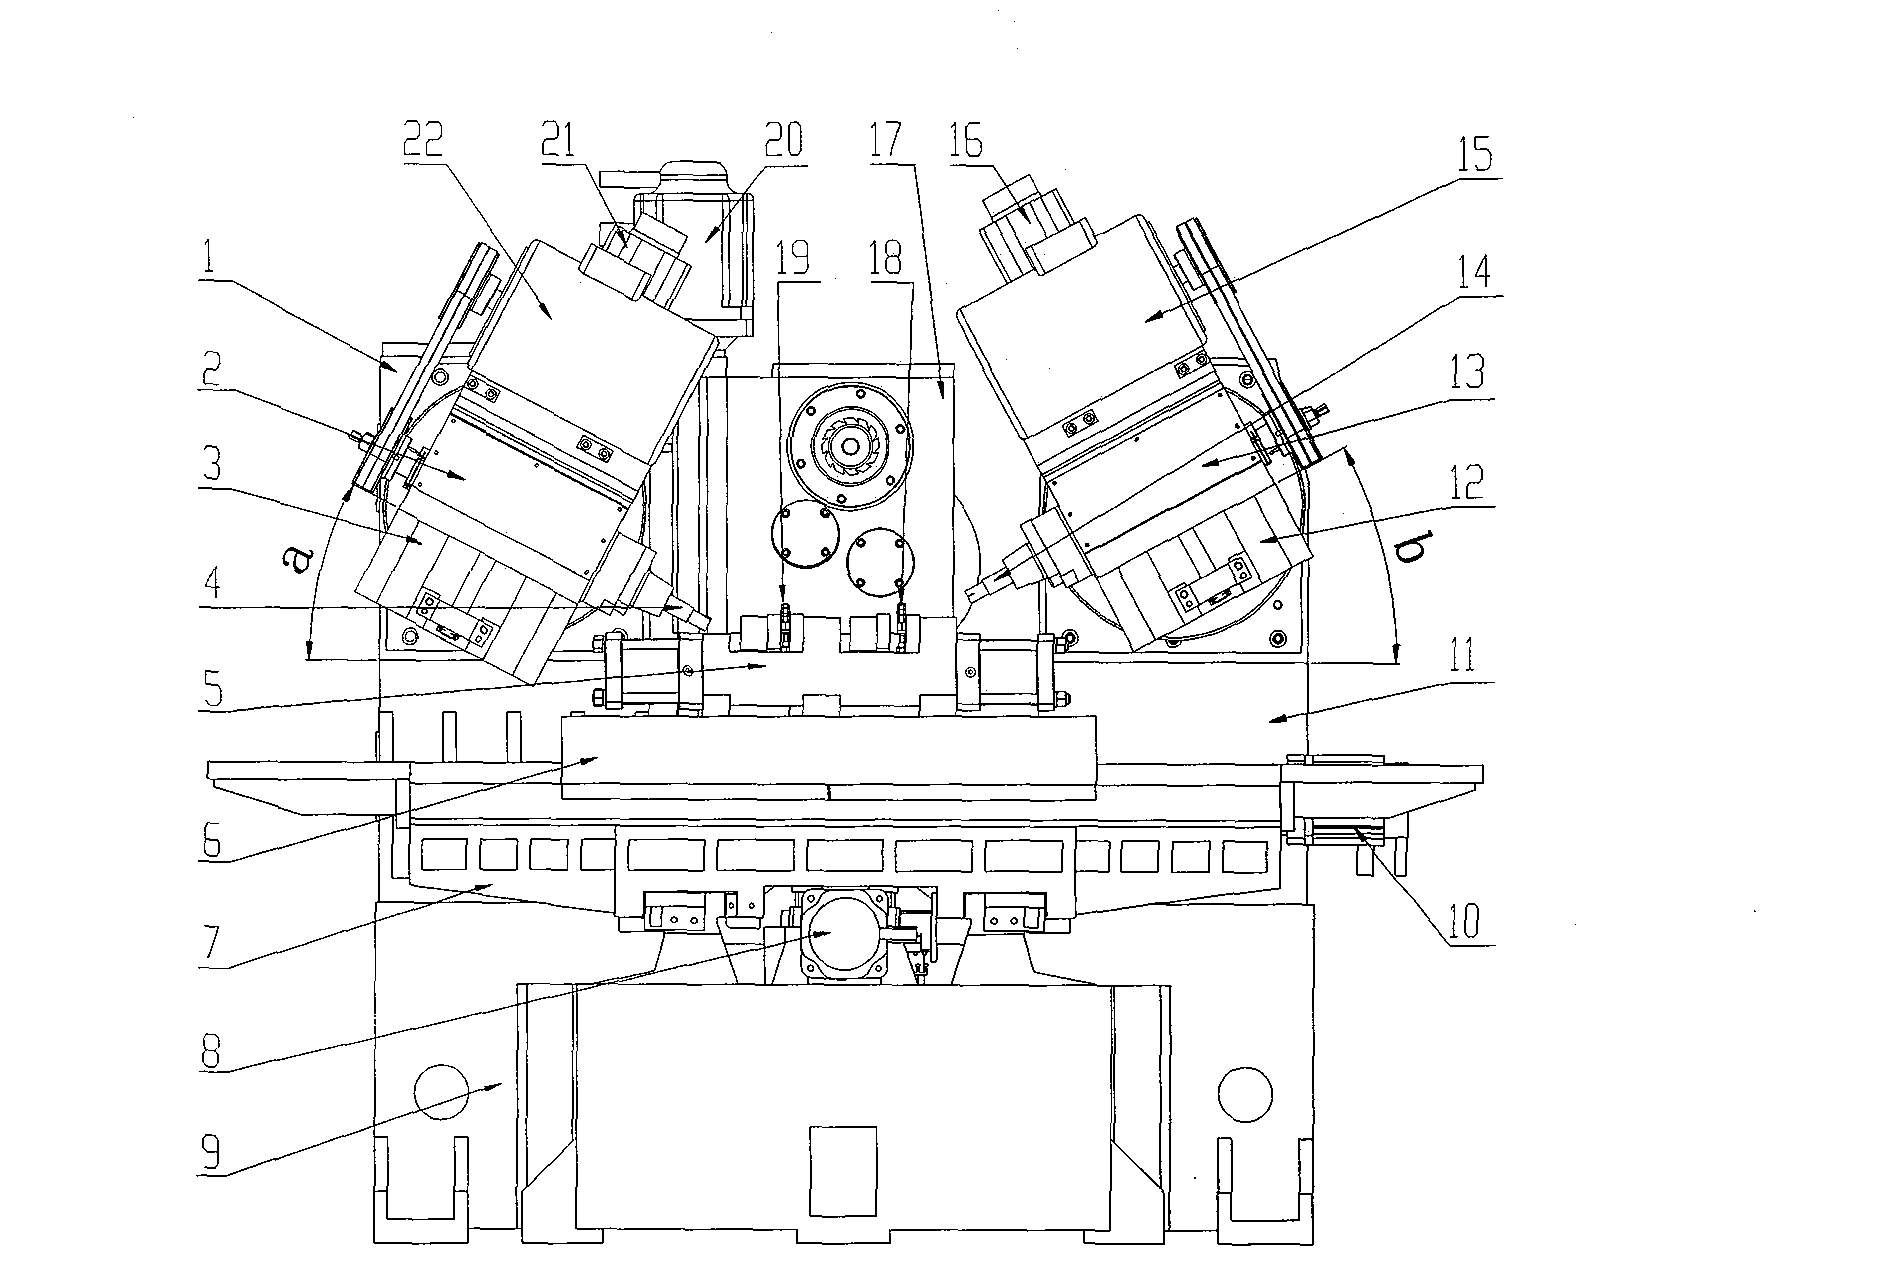 Multi-station plier numerical control milling machine